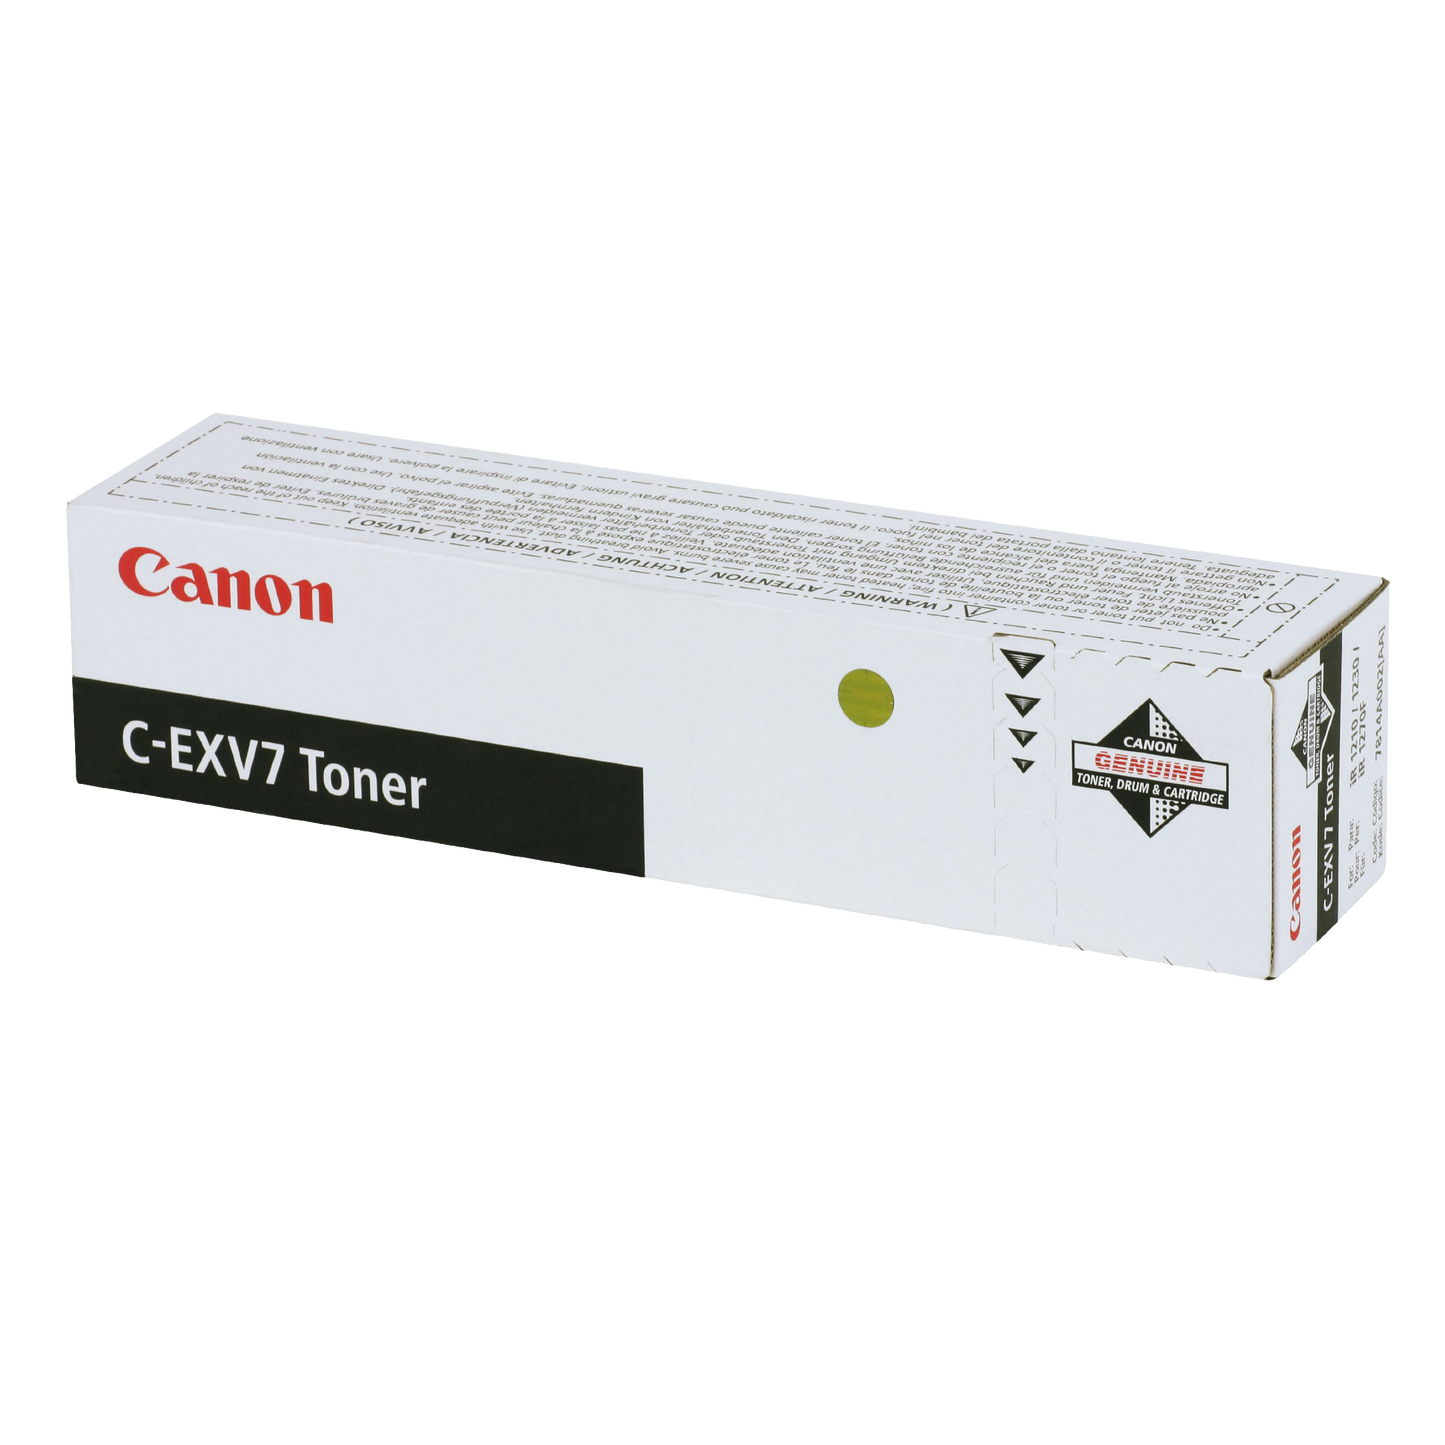 Canon C-EXV7 Toner Cartridge Black